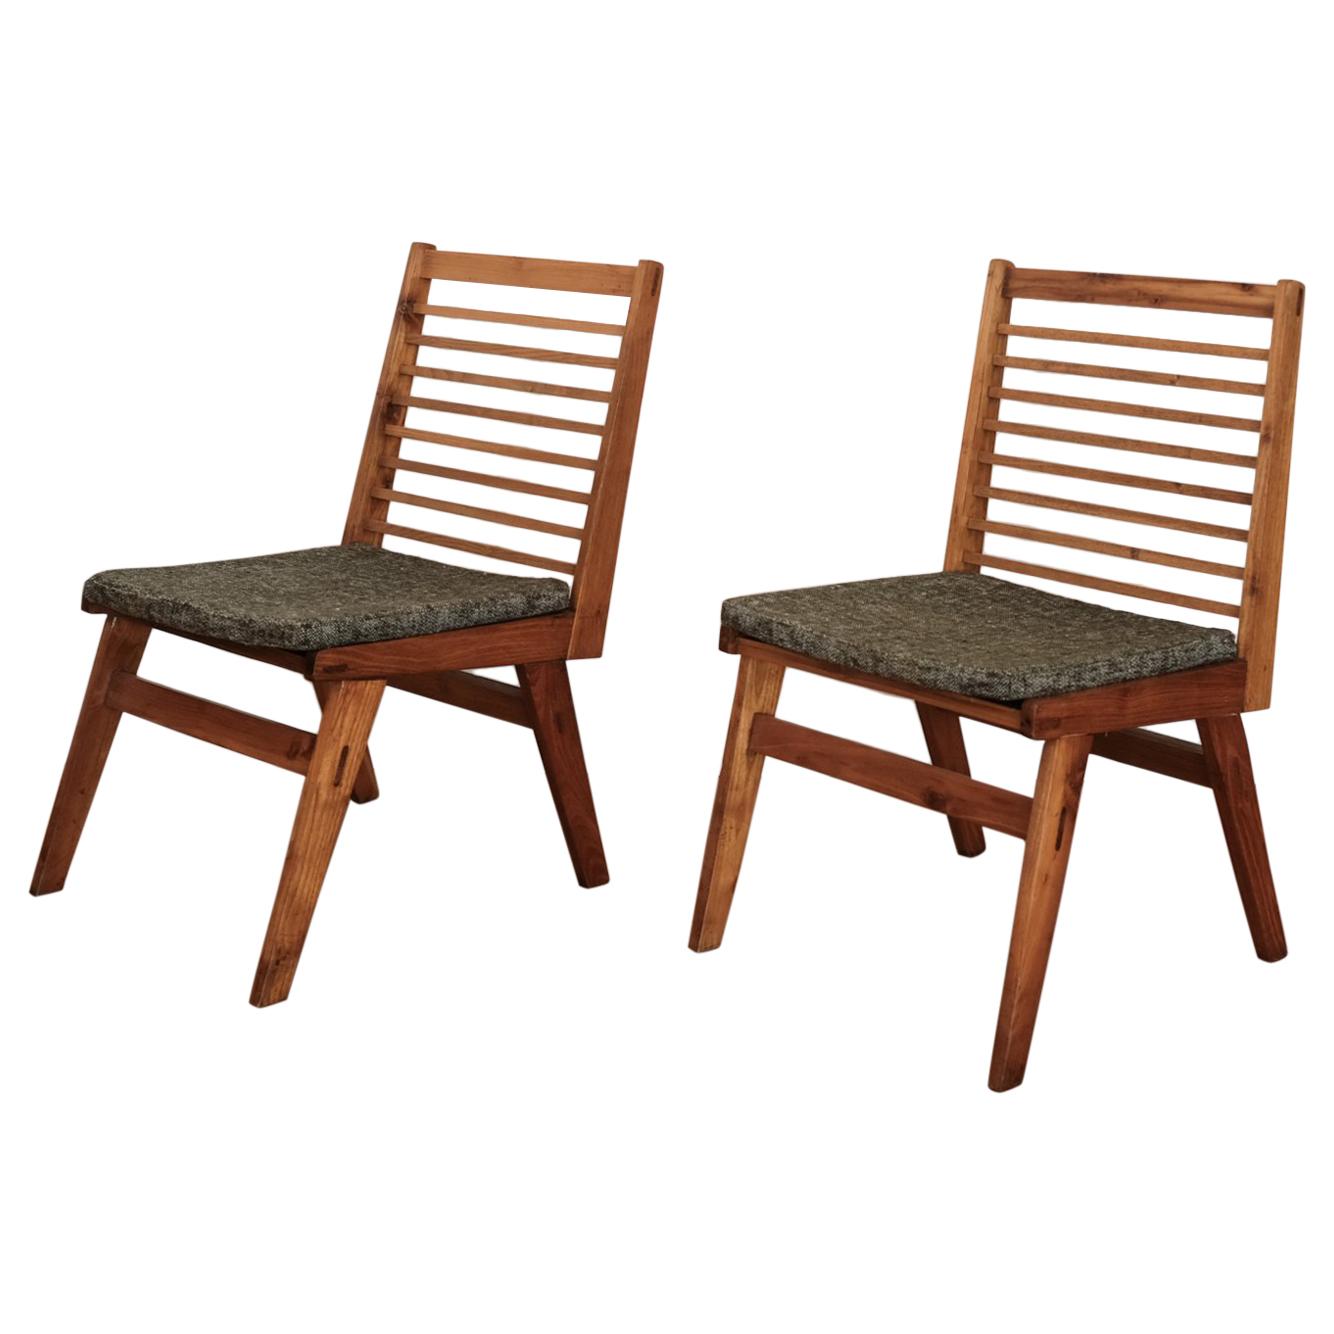 Pair of Constructivist Wood Slat Chairs